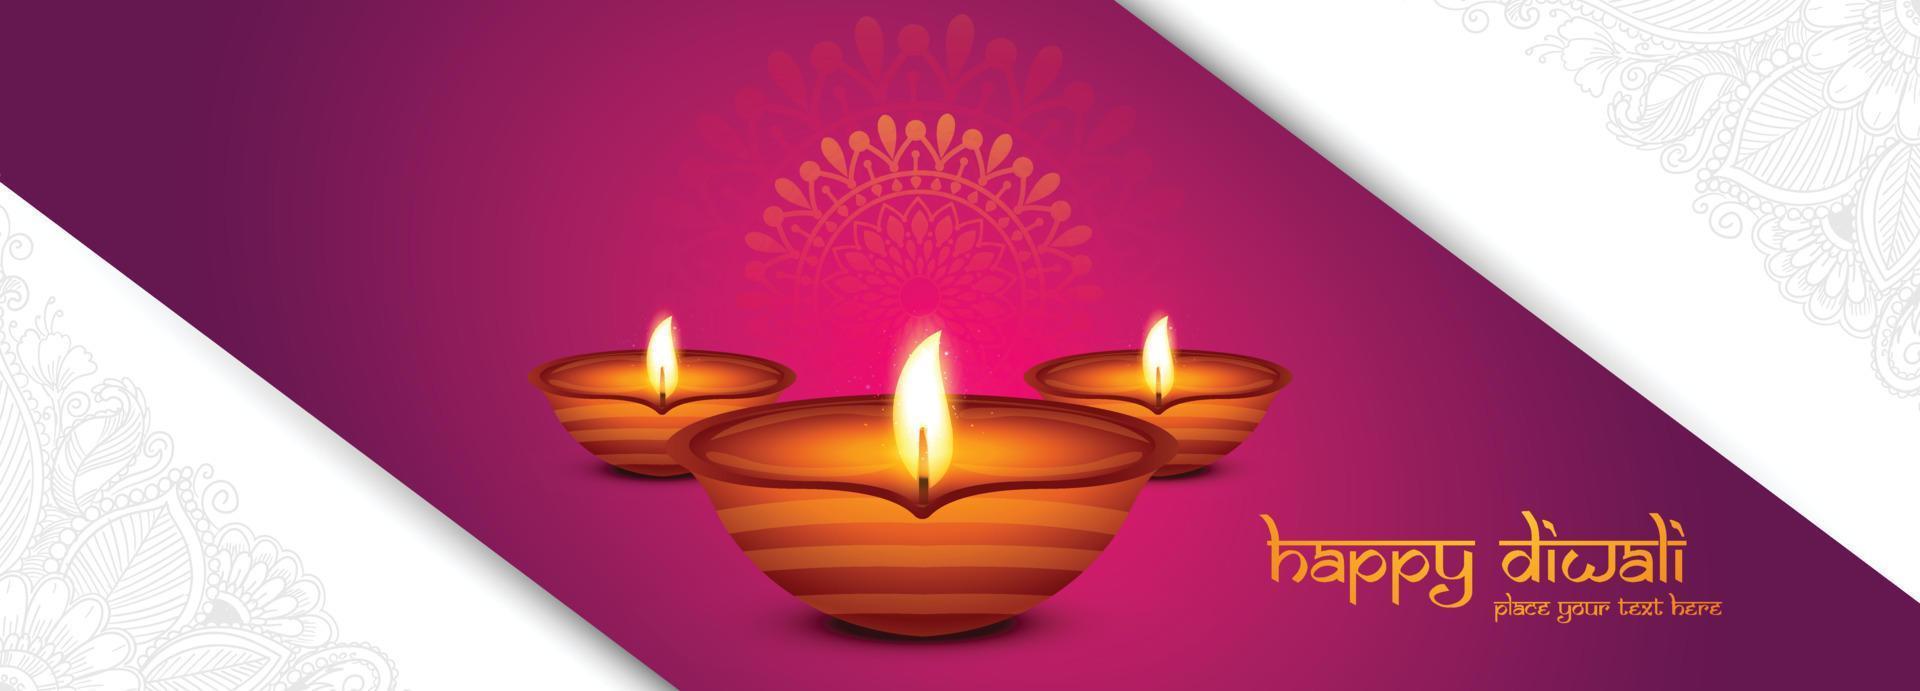 Happy diwali wishes banner celebration card background 12388808 ...